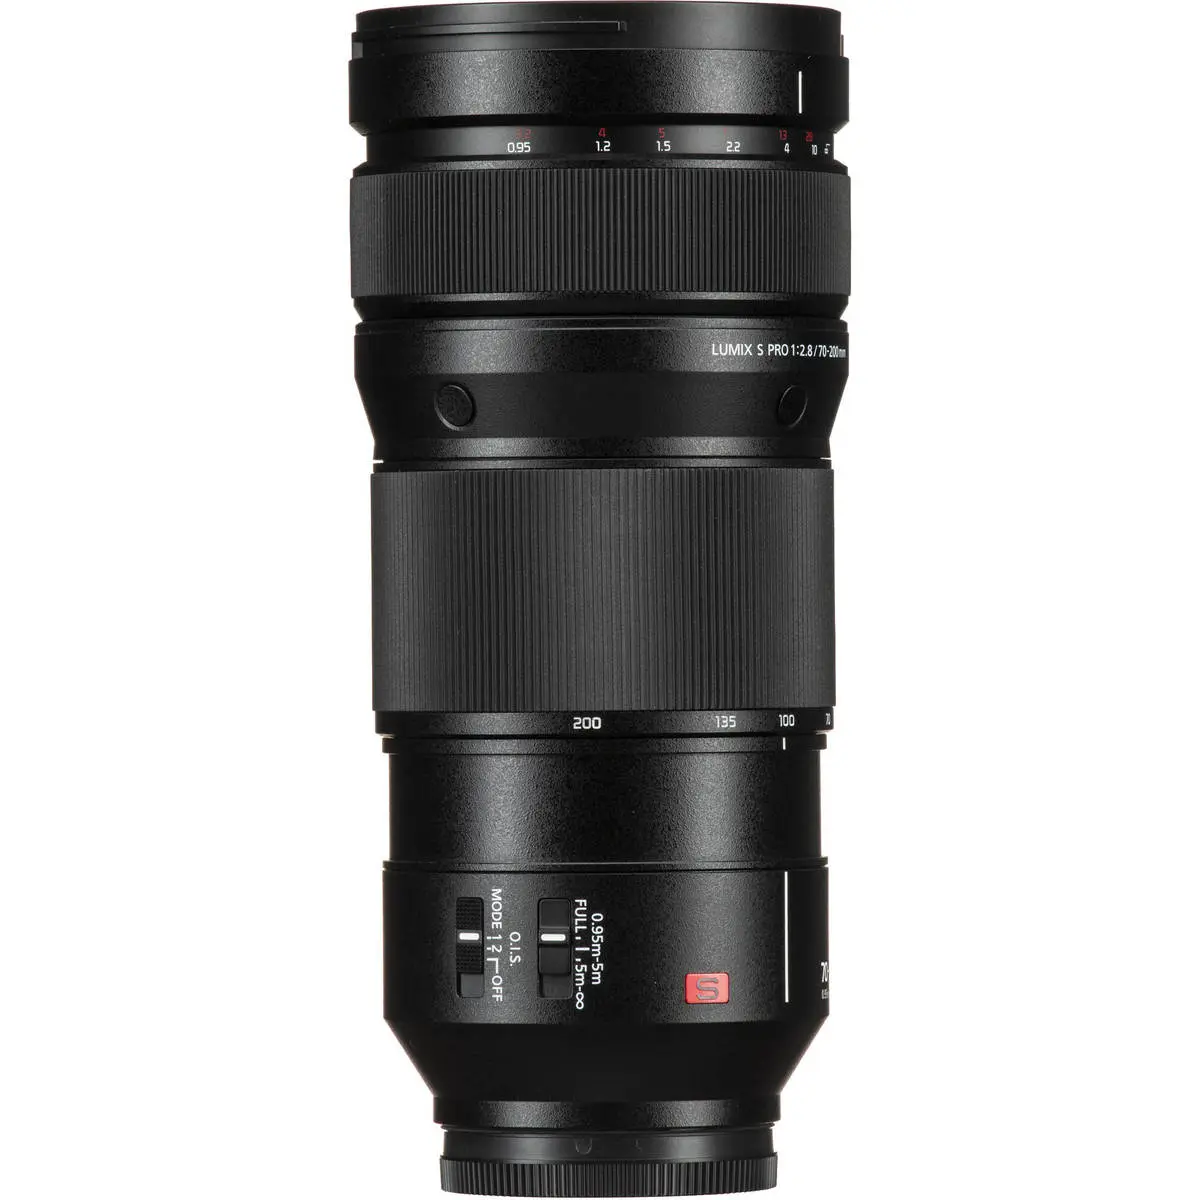 7. Panasonic Lumix S Pro 70-200mm F2.8 O.I.S. Lens